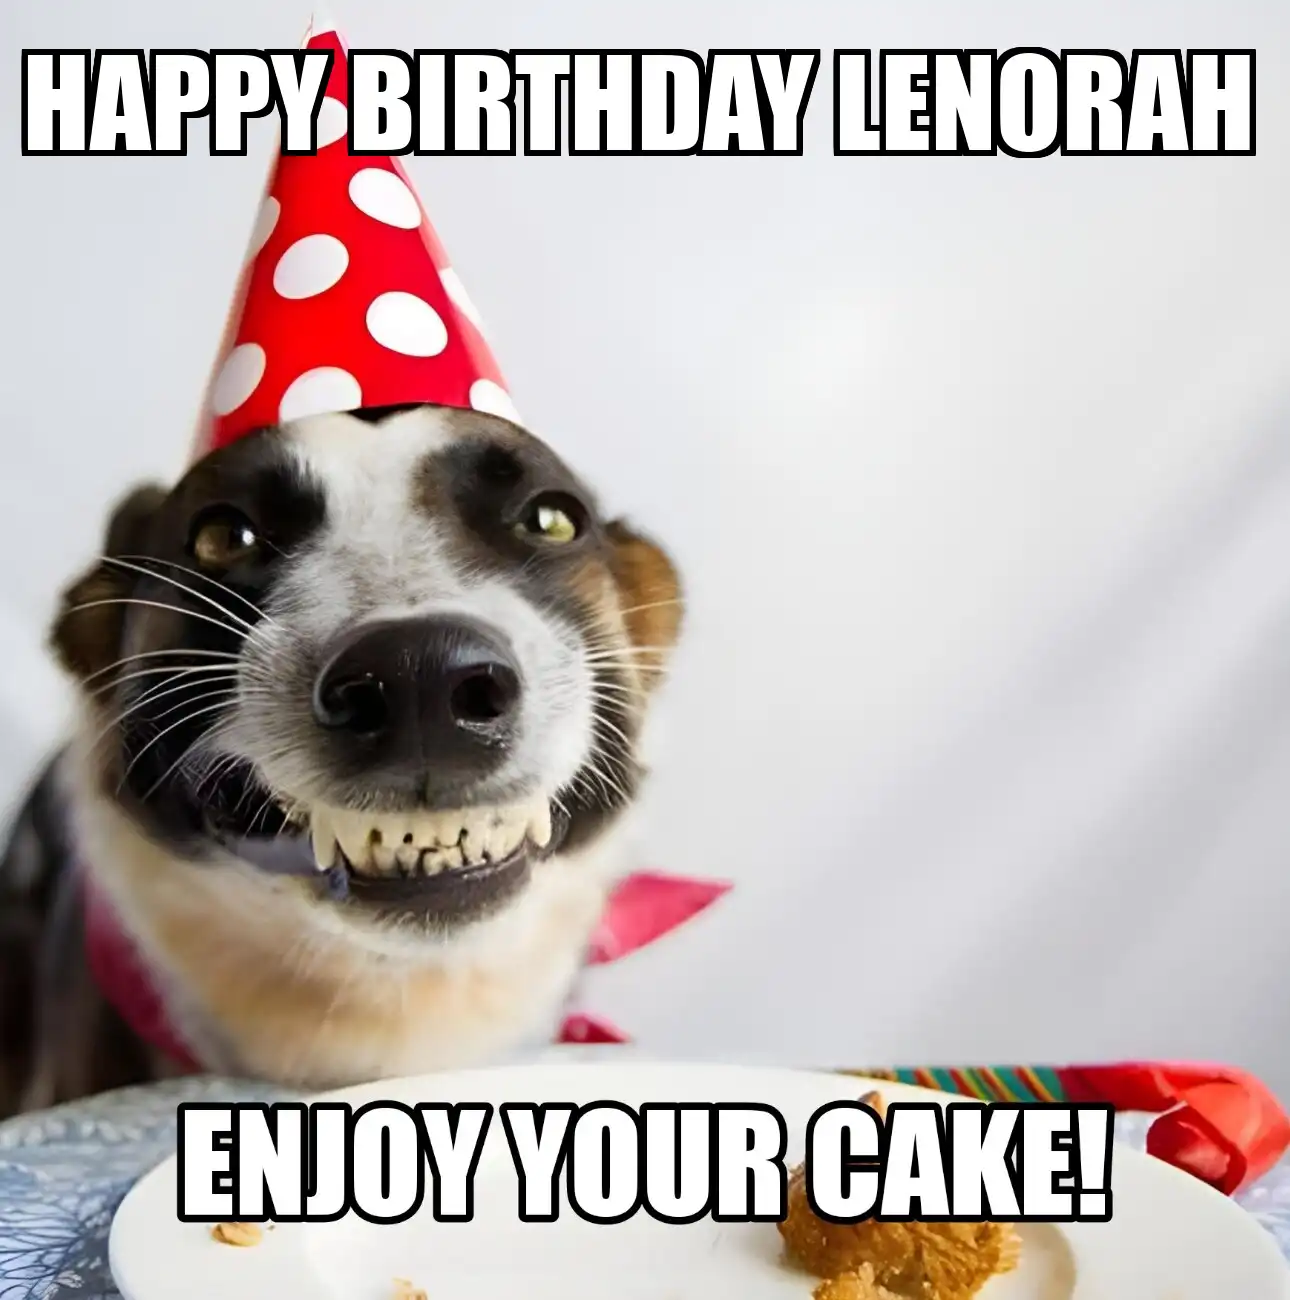 Happy Birthday Lenorah Enjoy Your Cake Dog Meme